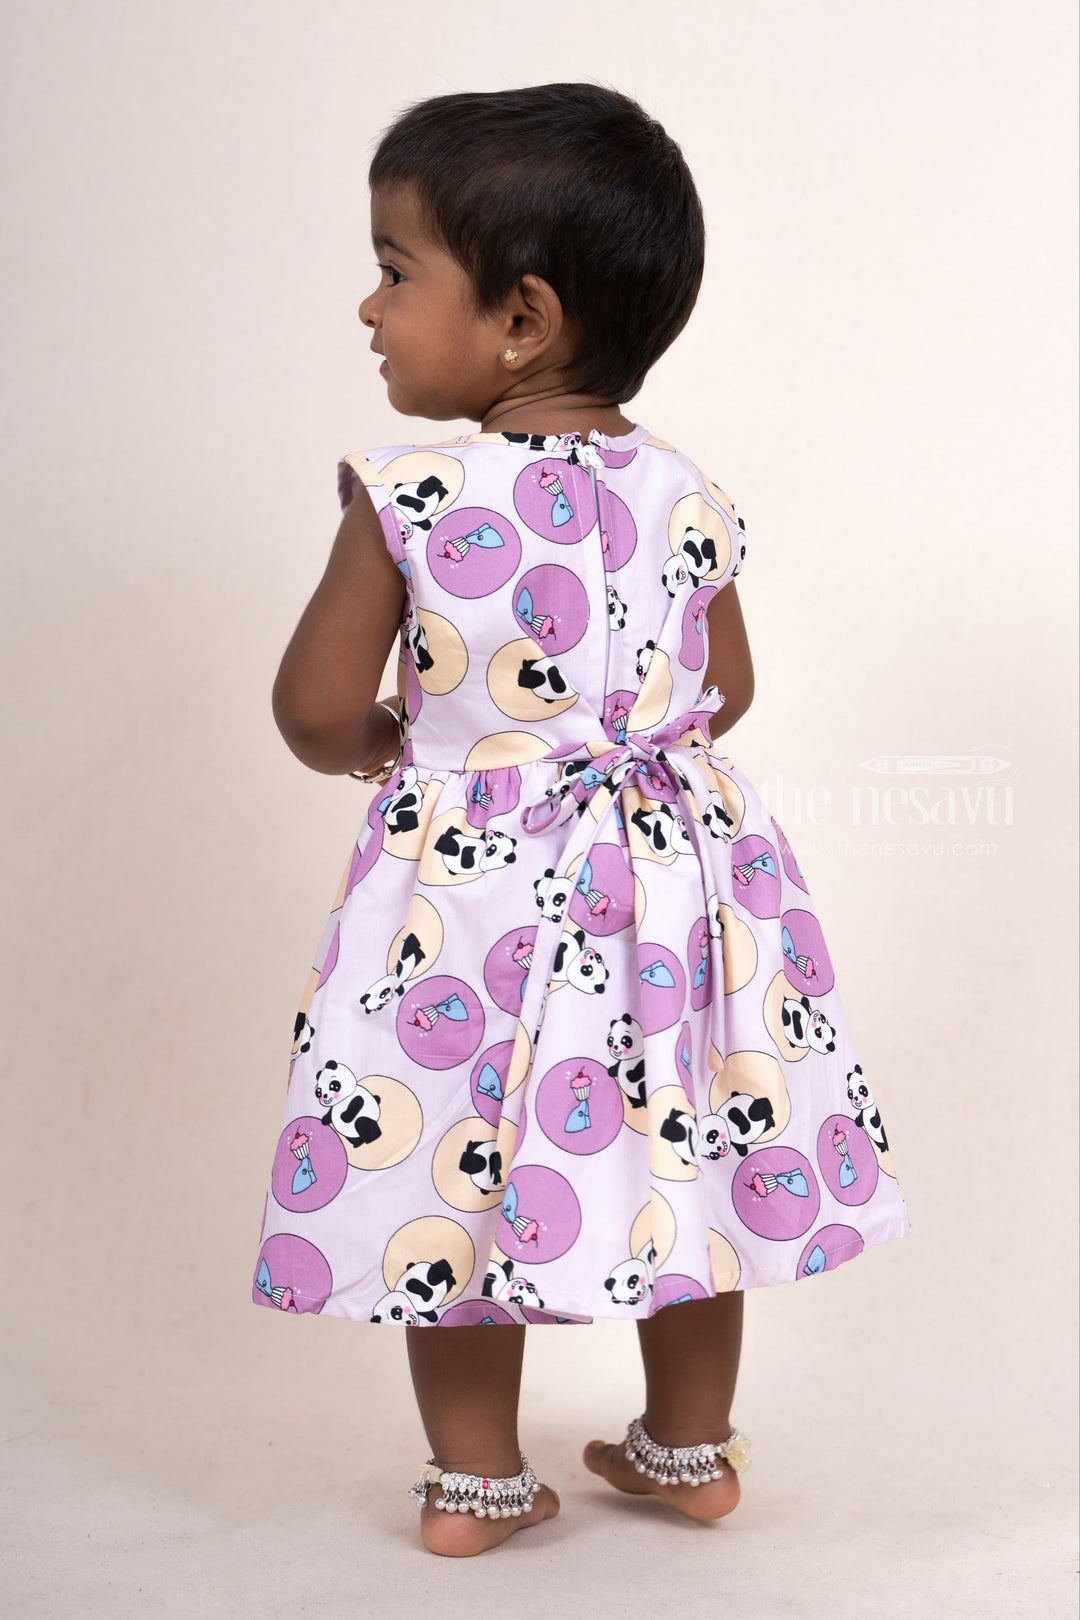 The Nesavu Baby Frock / Jhabla Smart Soft Cotton Sleeveless Play Wear Frock For New Born Infant psr silks Nesavu